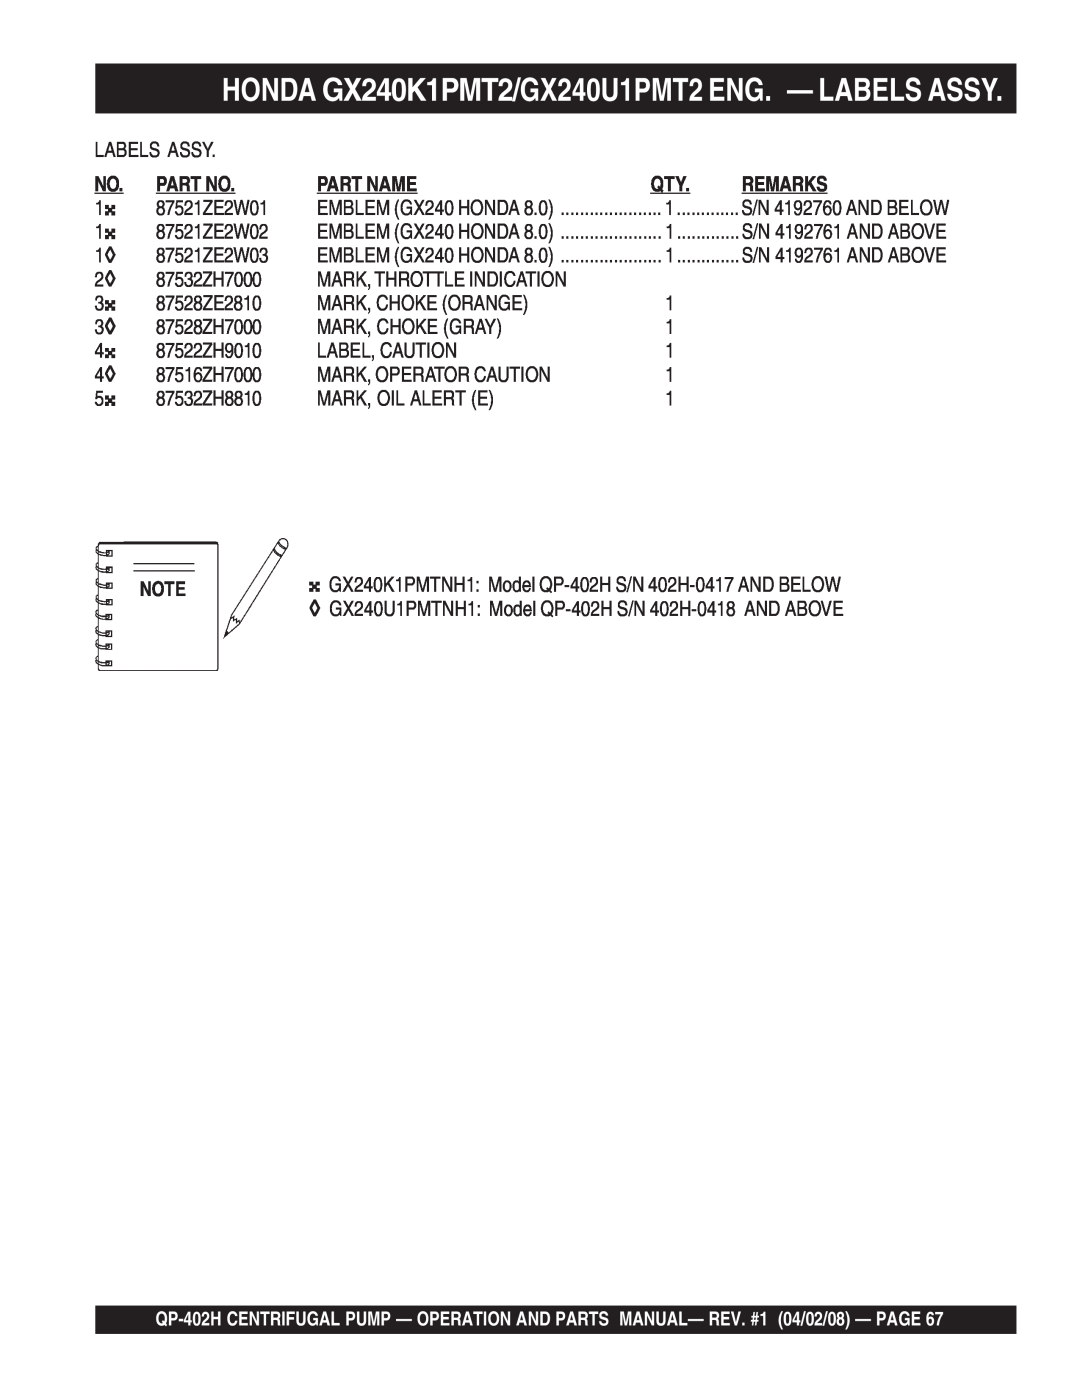 Multiquip qp-402h manual HONDA GX240K1PMT2/GX240U1PMT2 ENG. - LABELS ASSY, Labels Assy, Part Name, Remarks 